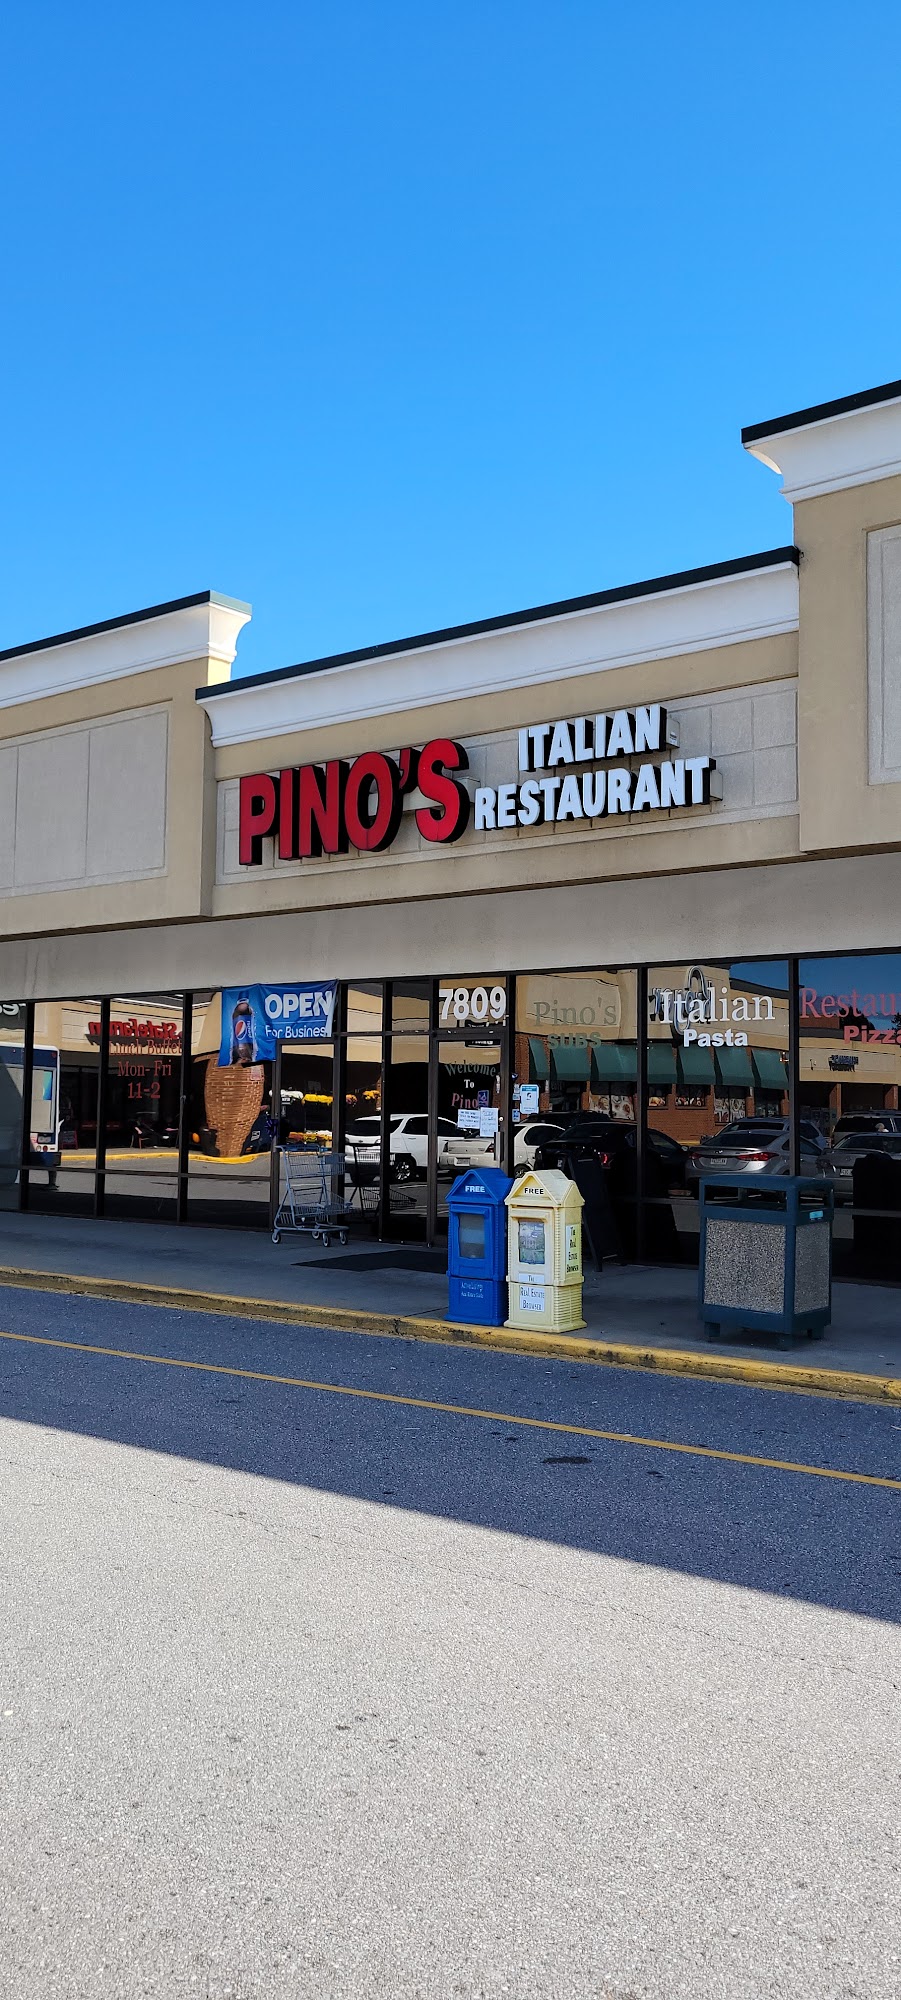 Pino's Pizza & Italian Restaurant